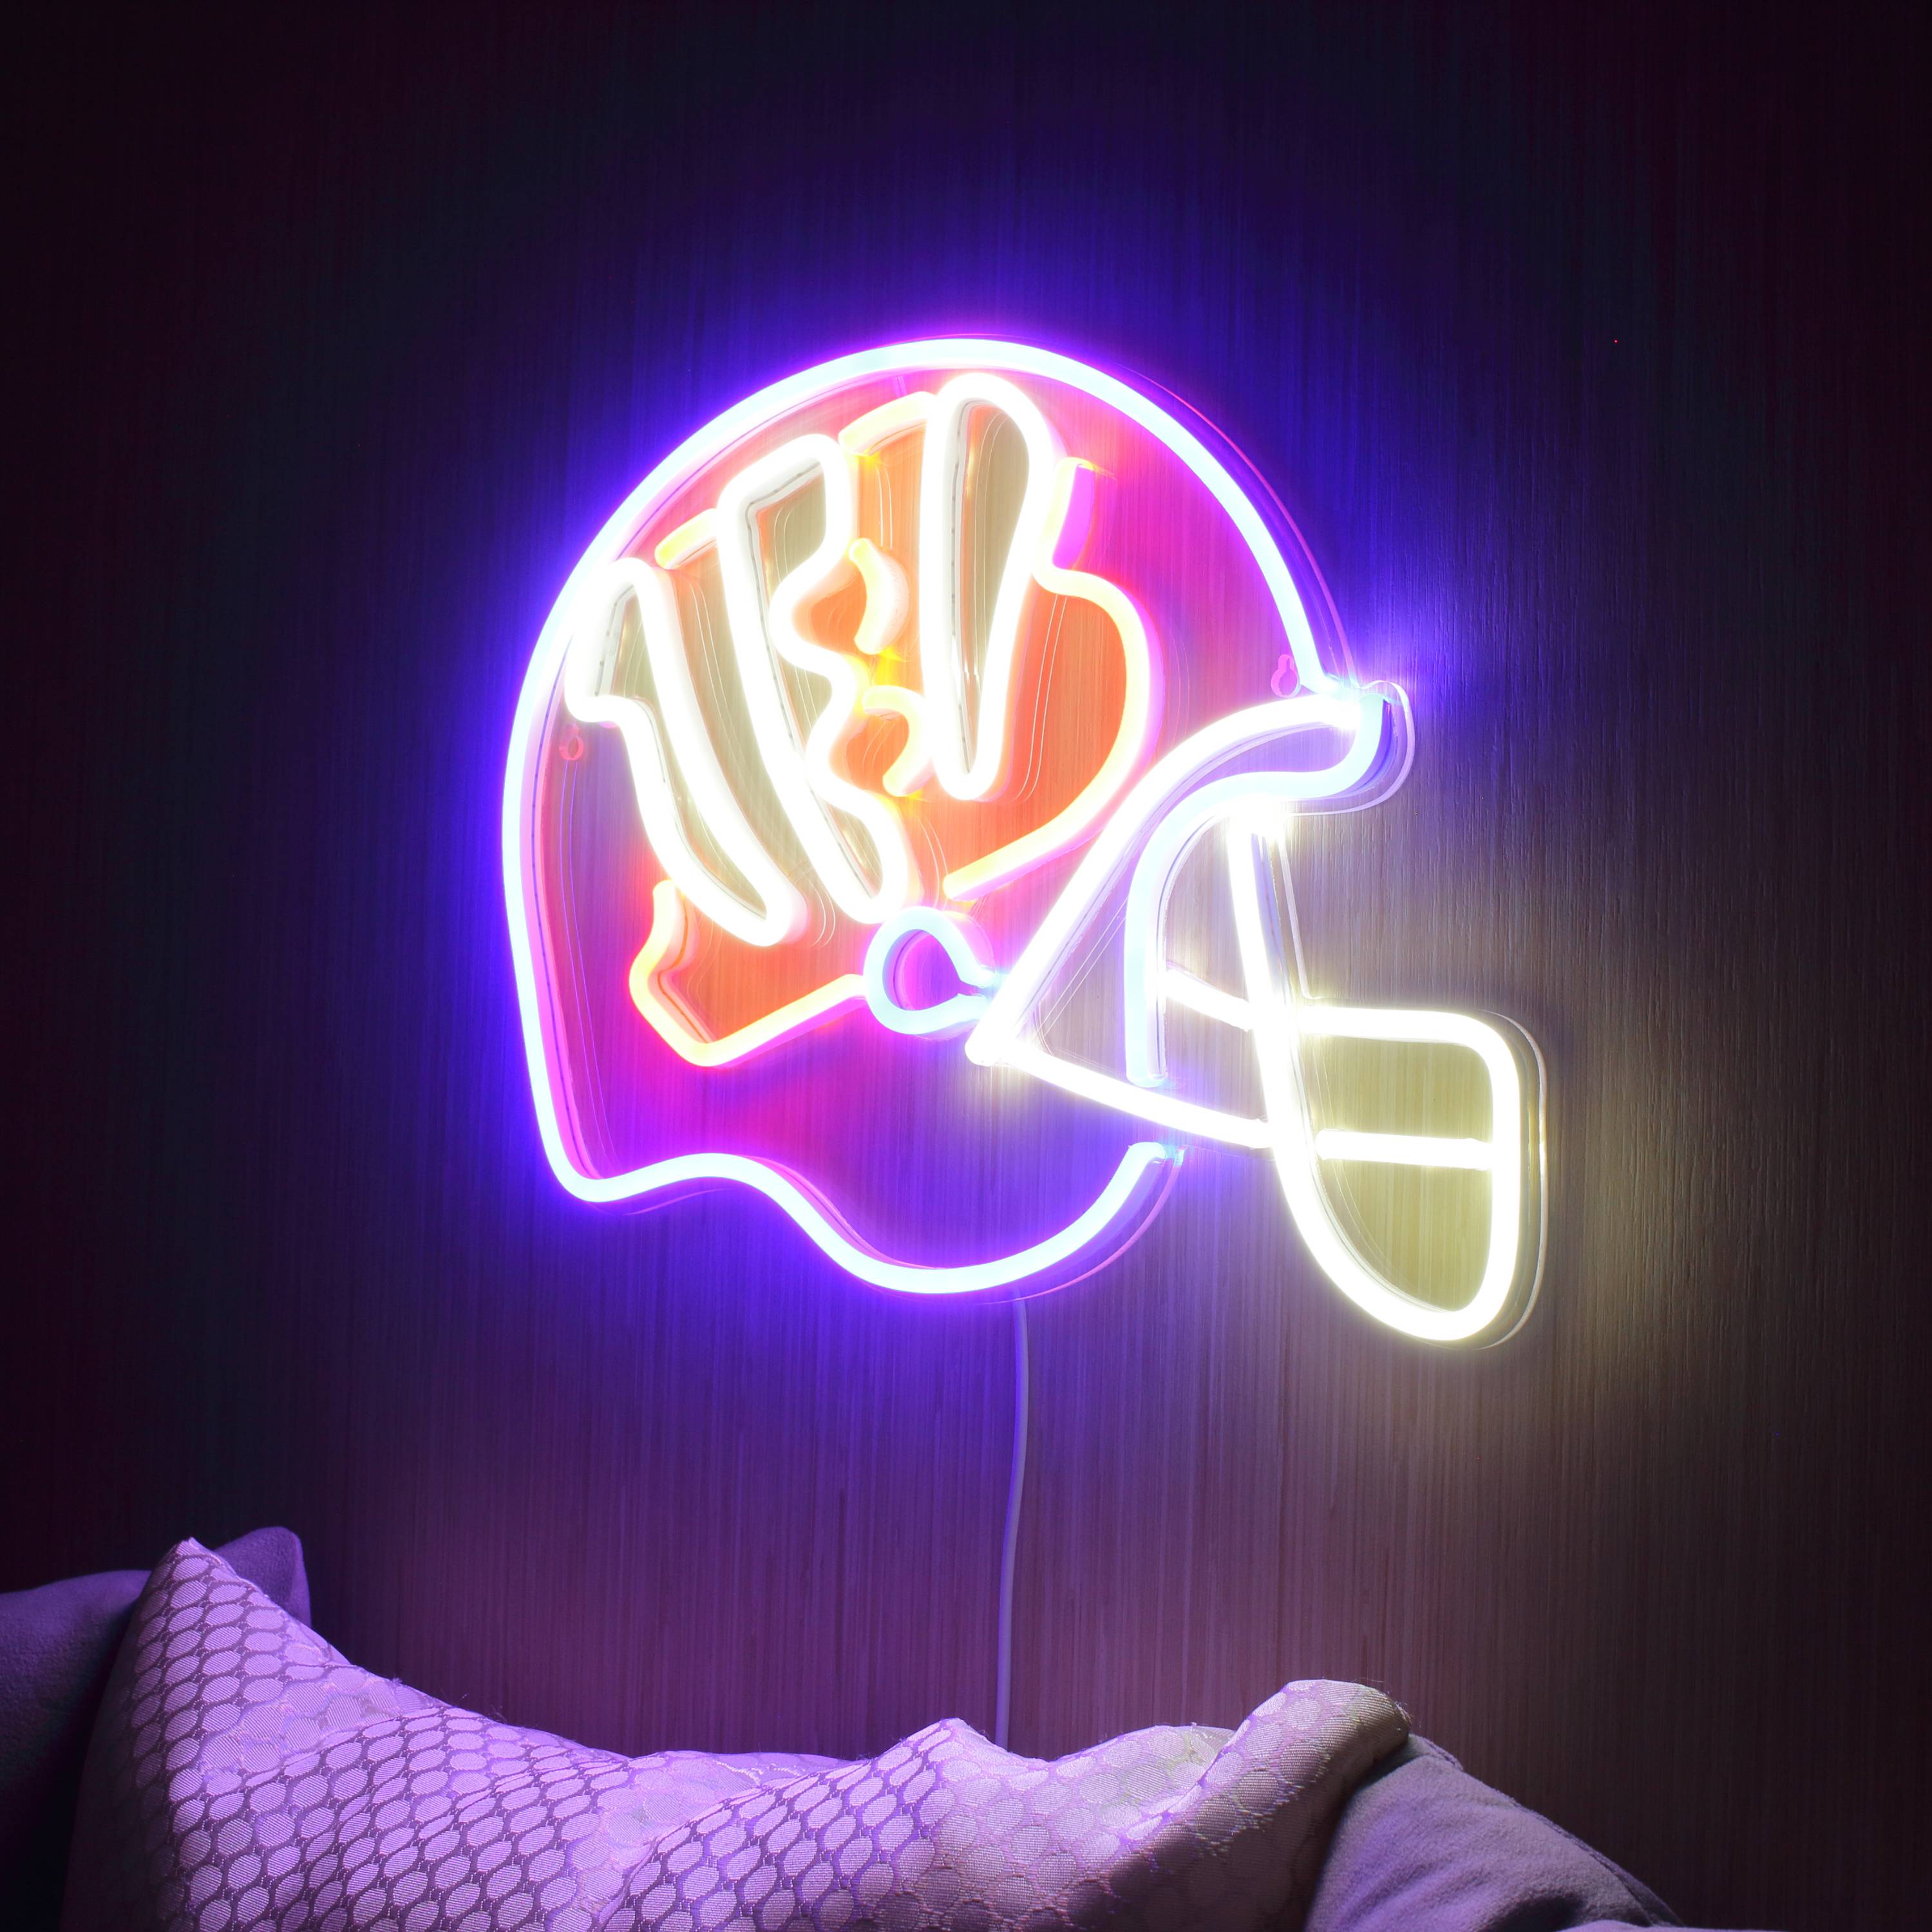 NFL Helmet Cincinnati Bengals Large Flex Neon LED Sign